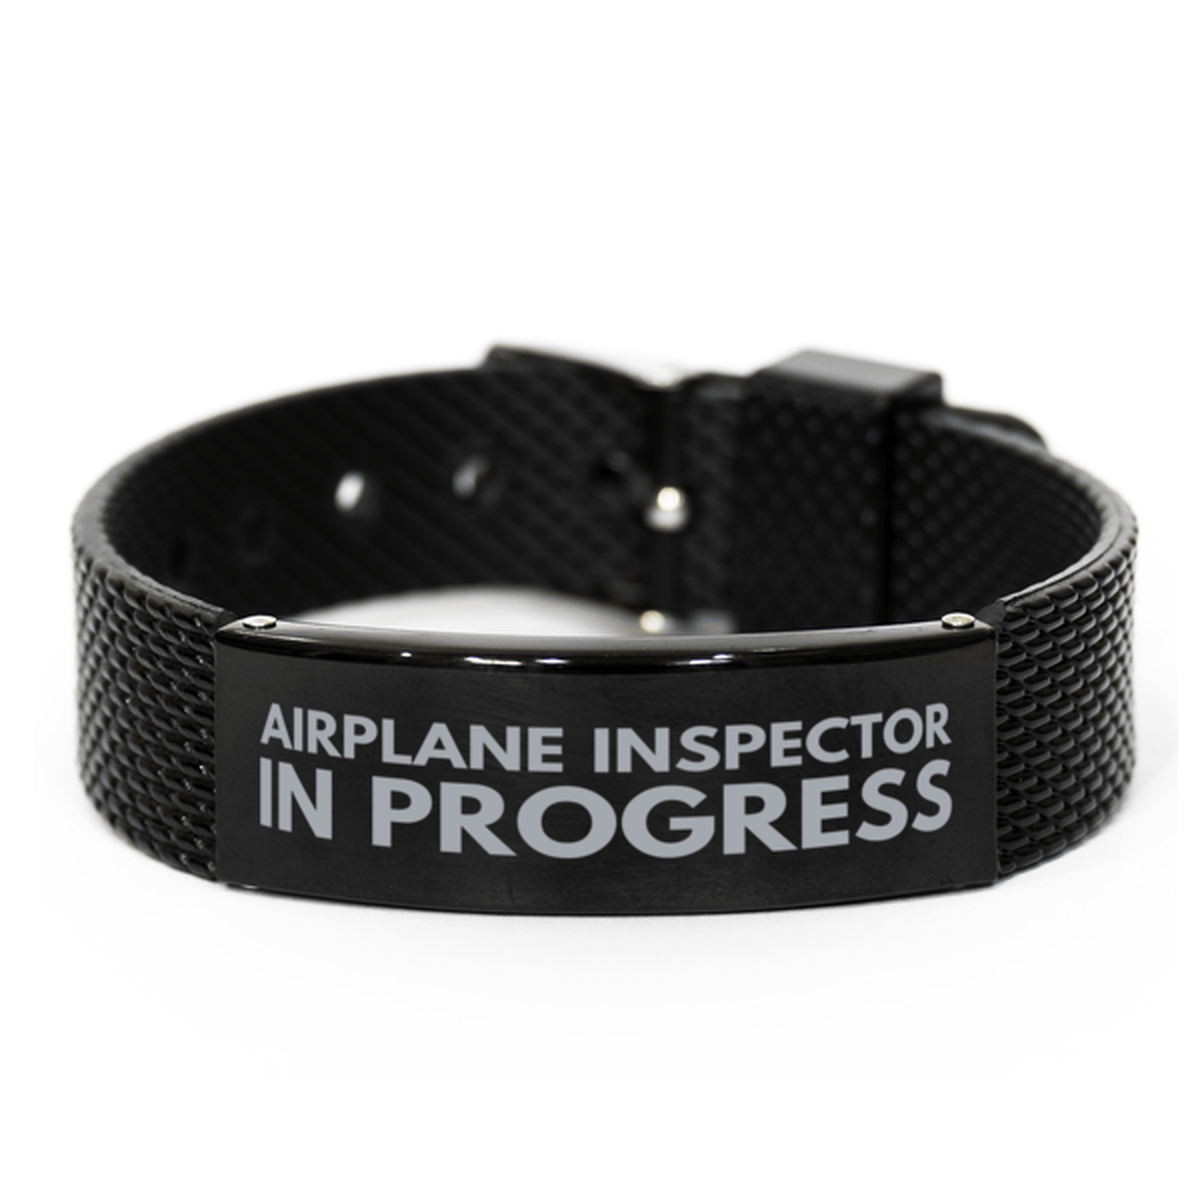 Inspirational Airplane Inspector Black Shark Mesh Bracelet, Airplane Inspector In Progress, Best Graduation Gifts for Students